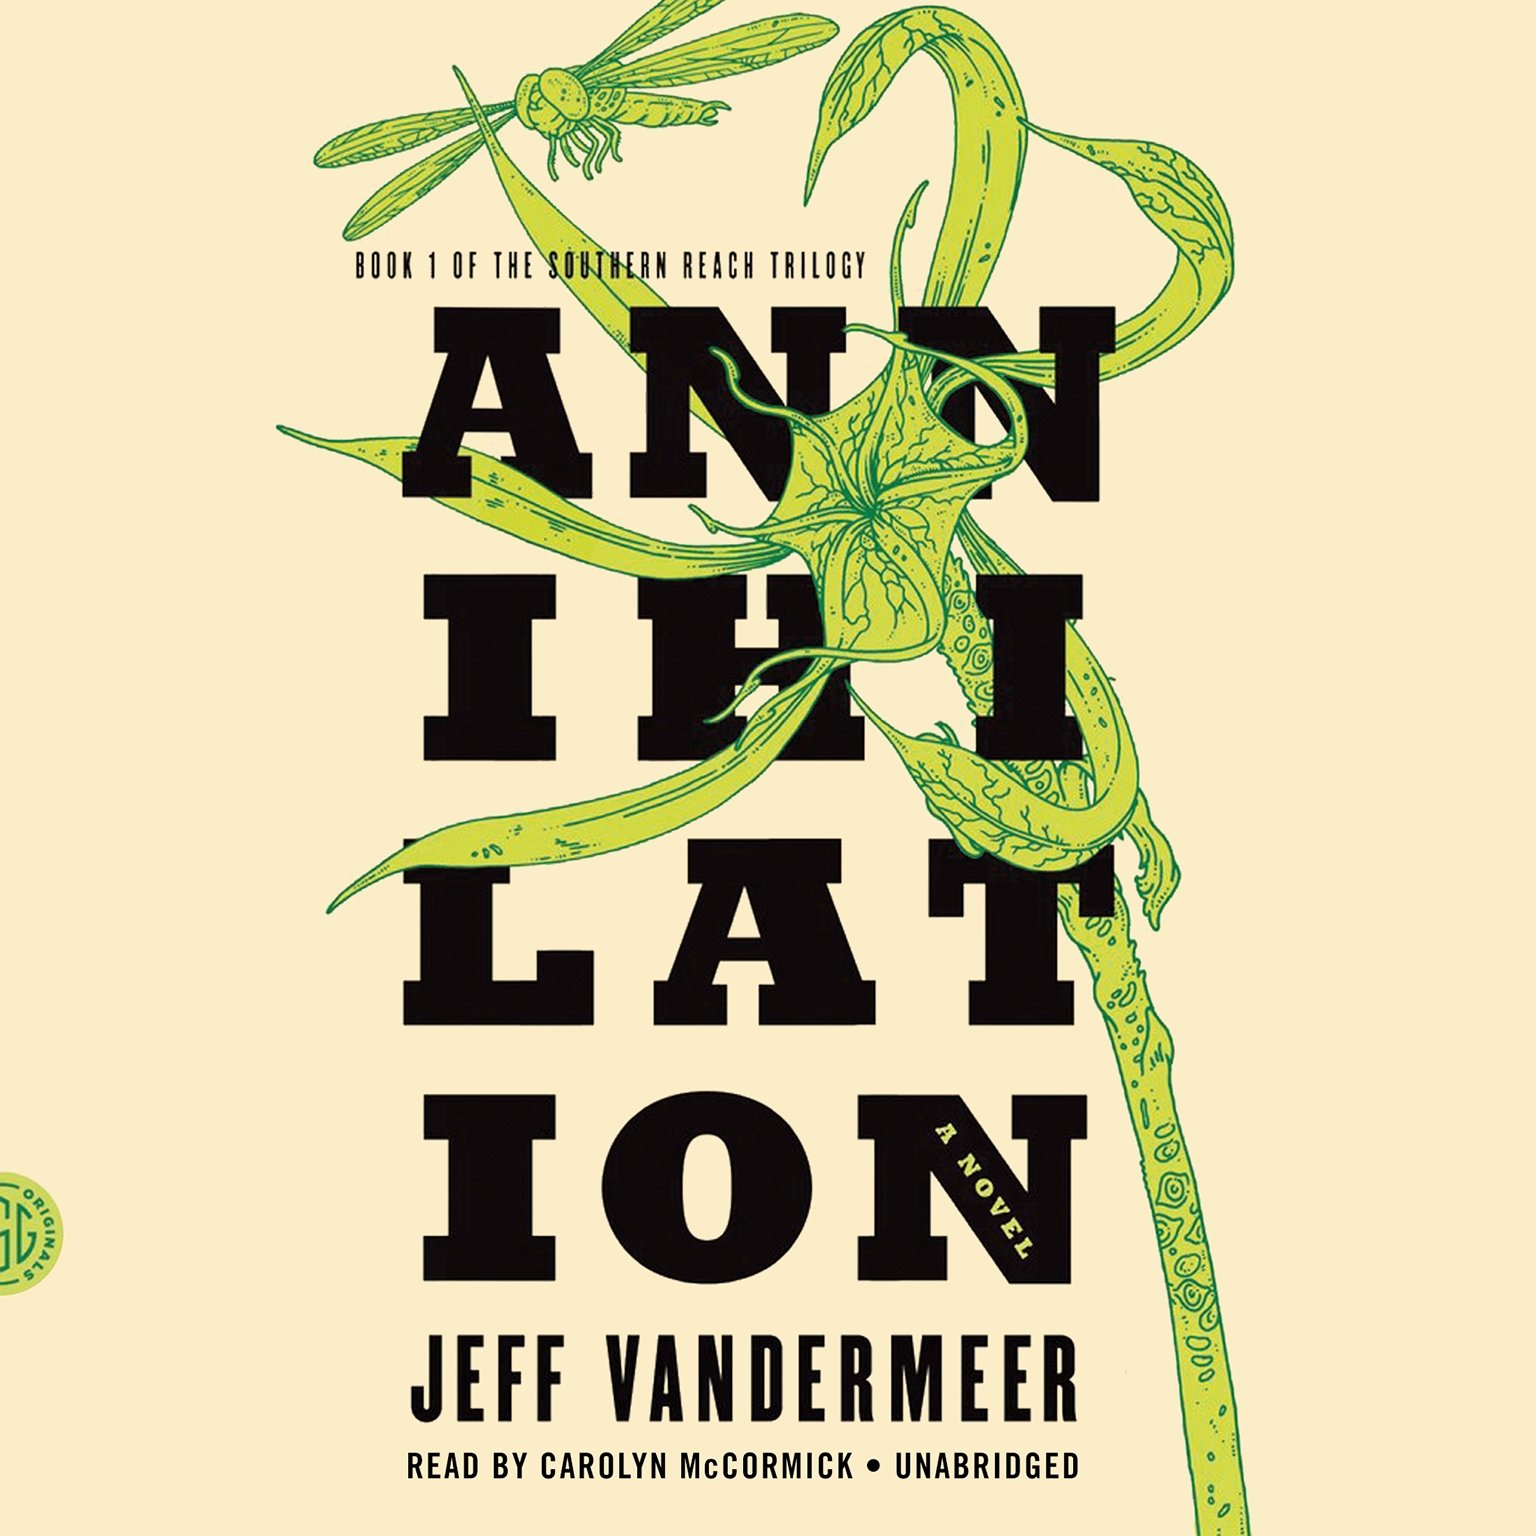 Jeff VanderMeer: Annihilation (AudiobookFormat, 2014, Blackstone Audio)